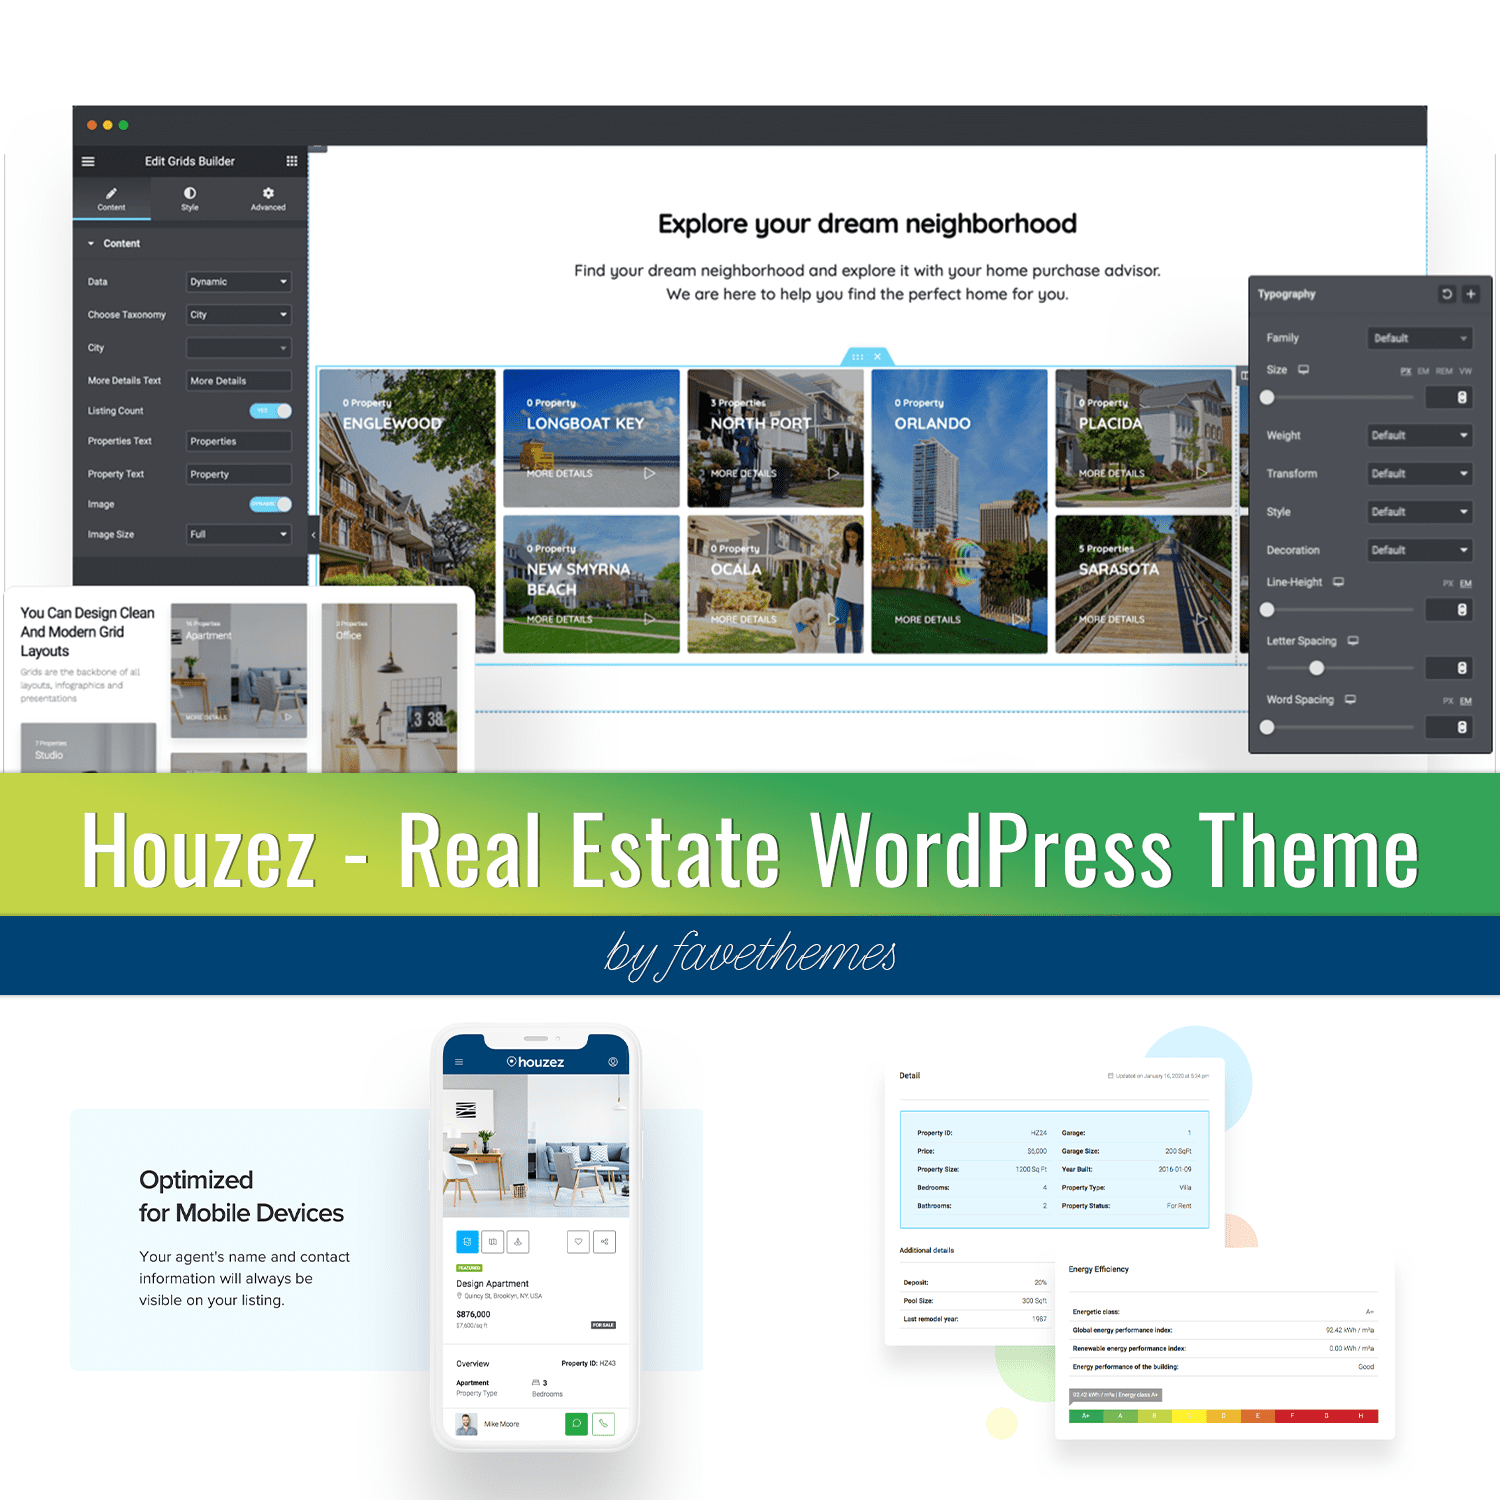 Houzez - Real Estate WordPress Theme.